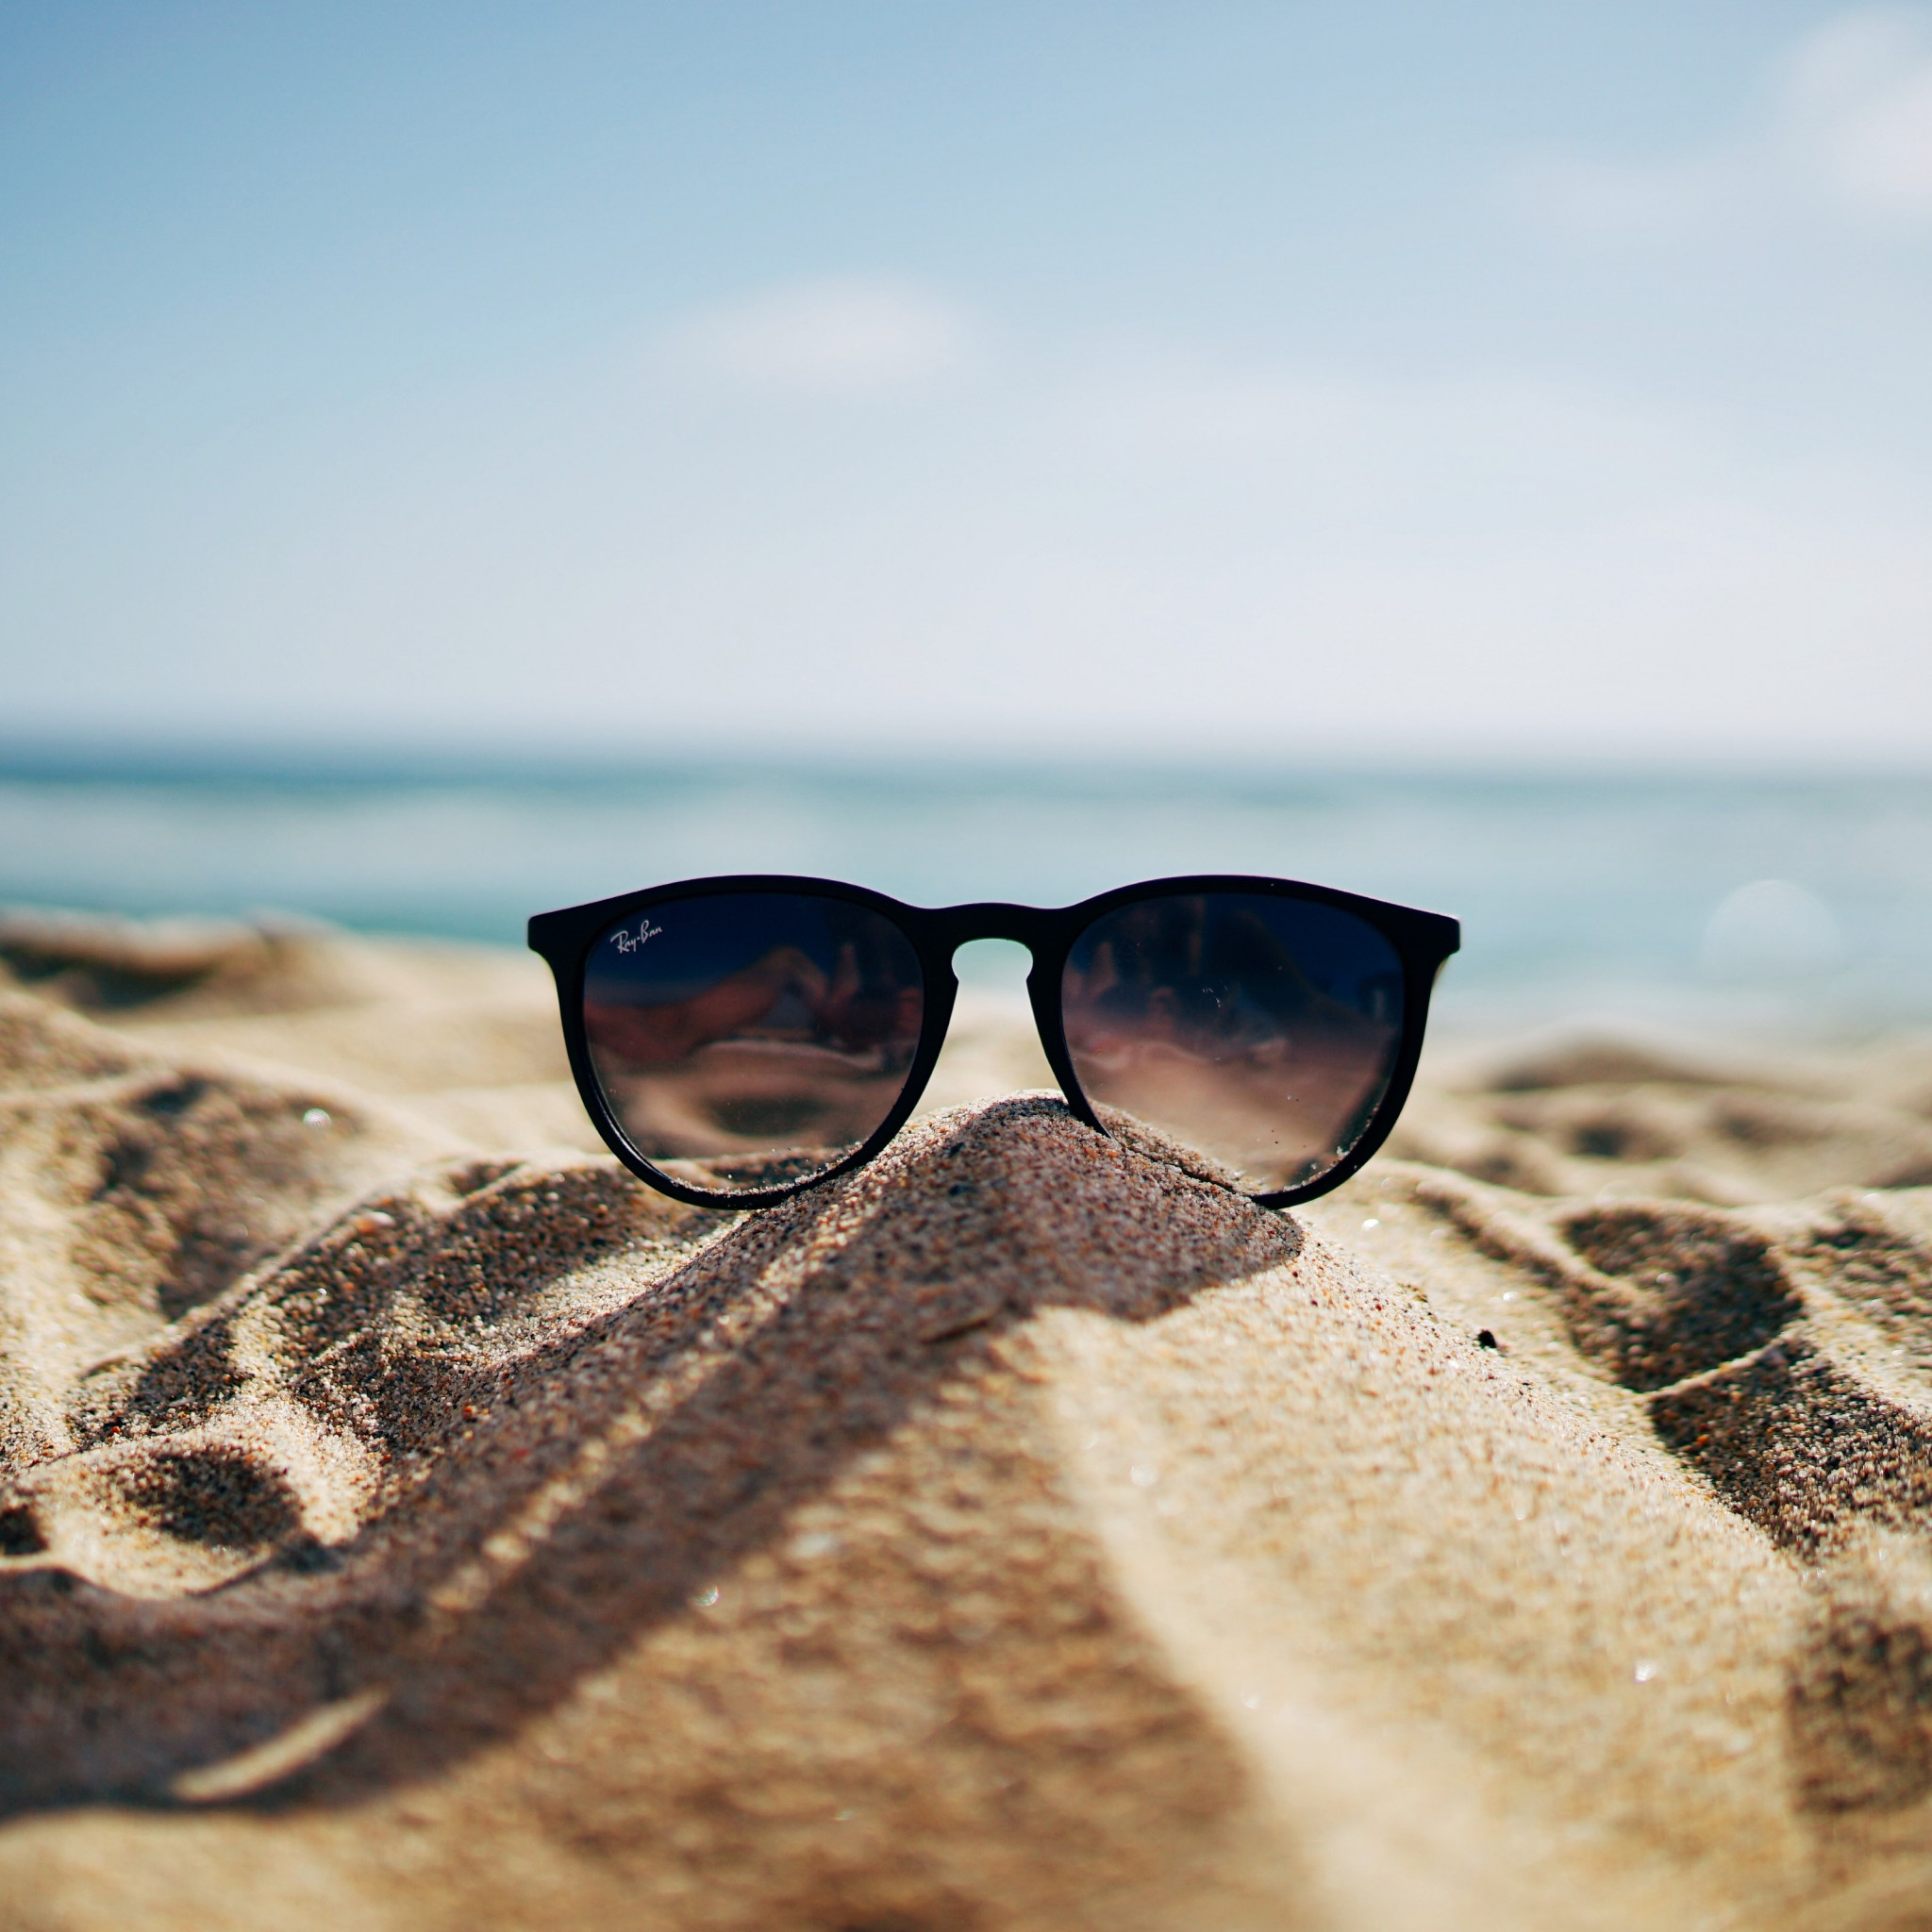 Ray Ban sunglasses on hot sand beach wallpaper 2048x2048